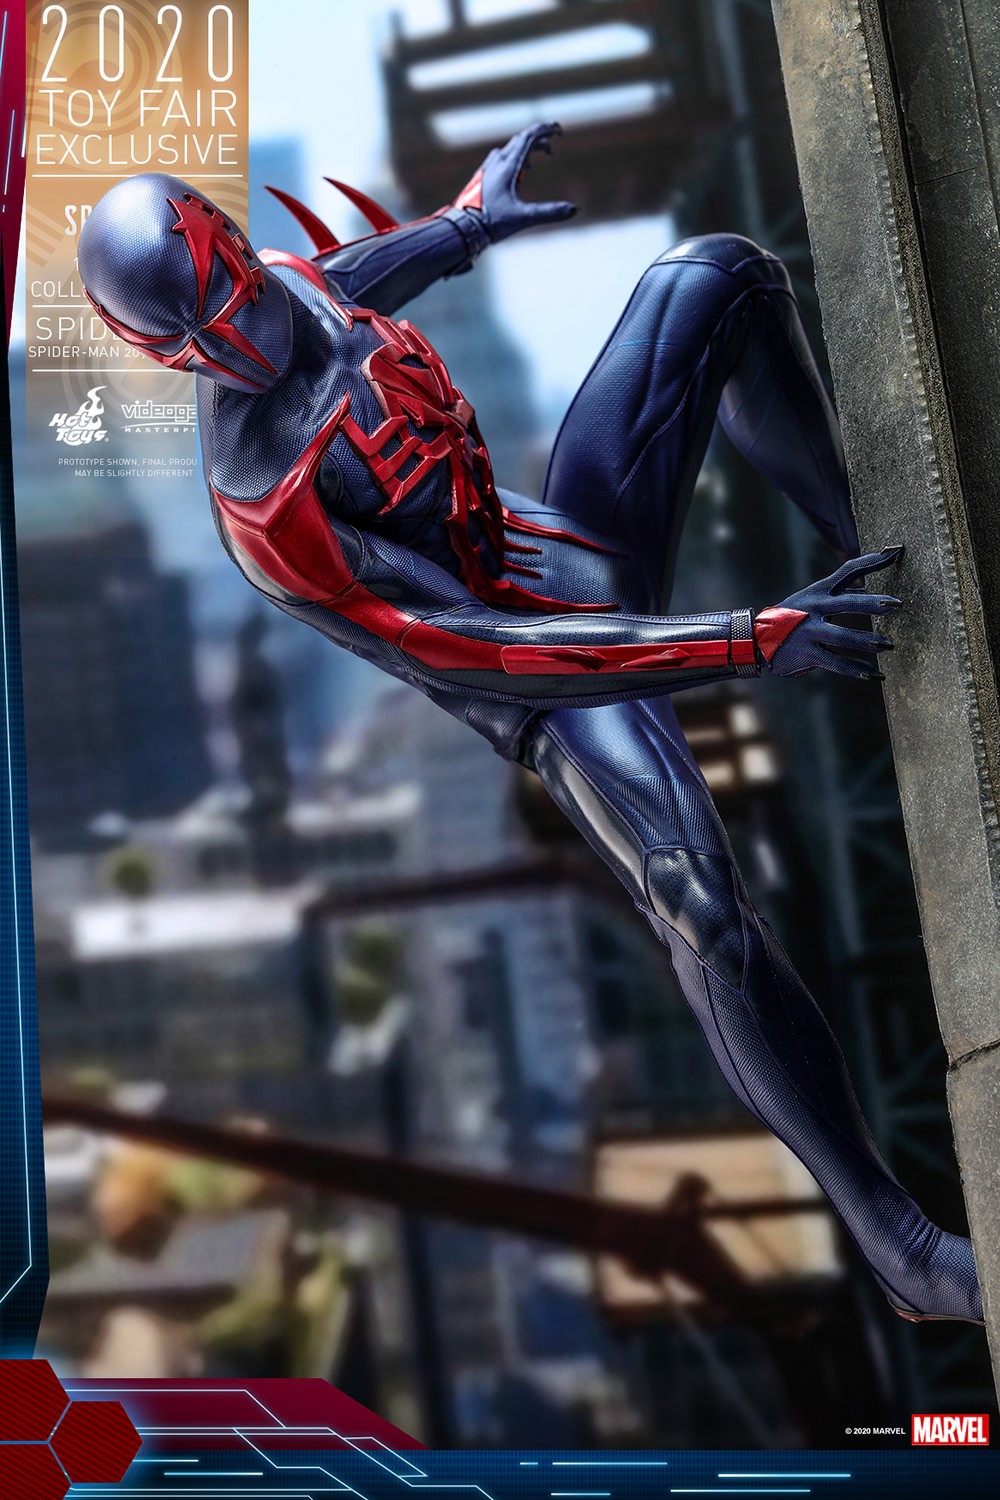 Spider-Man (Spider-Man 2099 Black Suit) Exclusive Edition (Prototype Shown) View 11